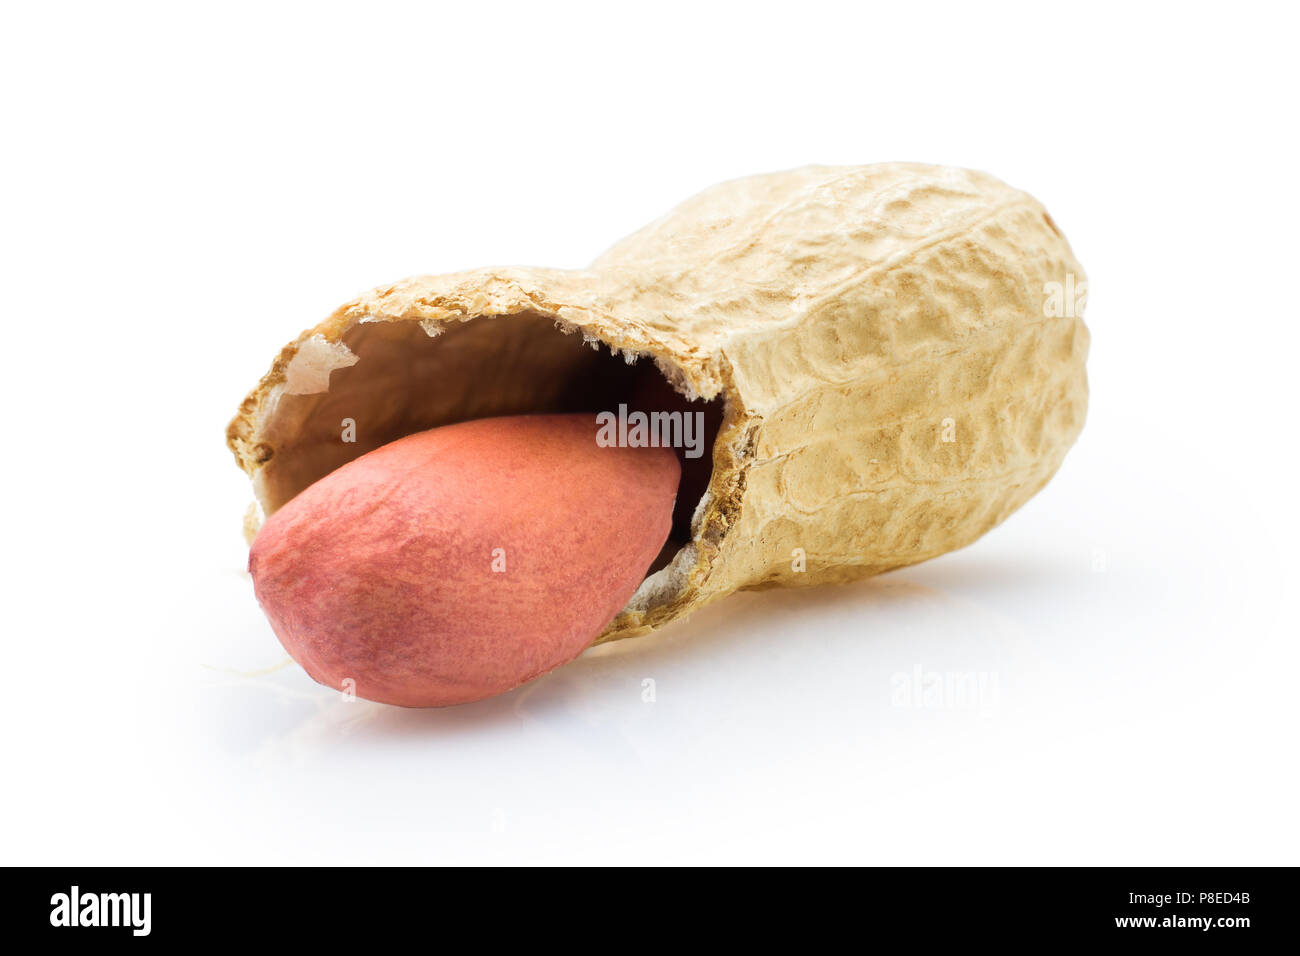 Peanut closeup on a white background, isolated Stock Photo